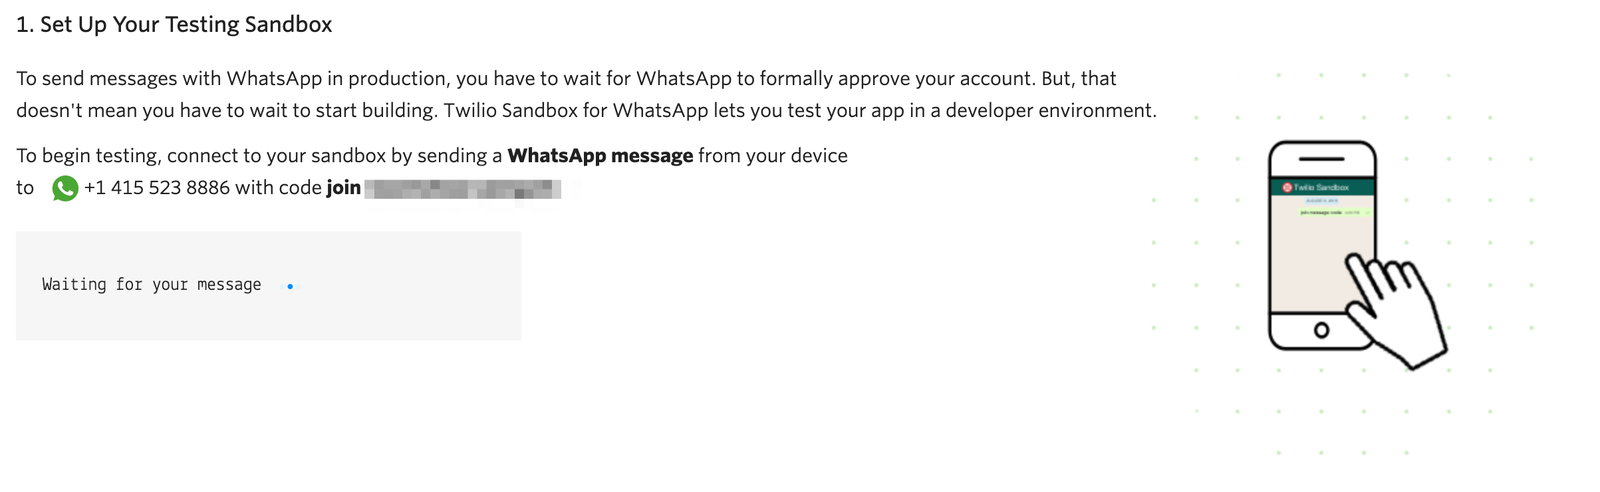 The Twilio Sandbox for WhatsApp screenshot.